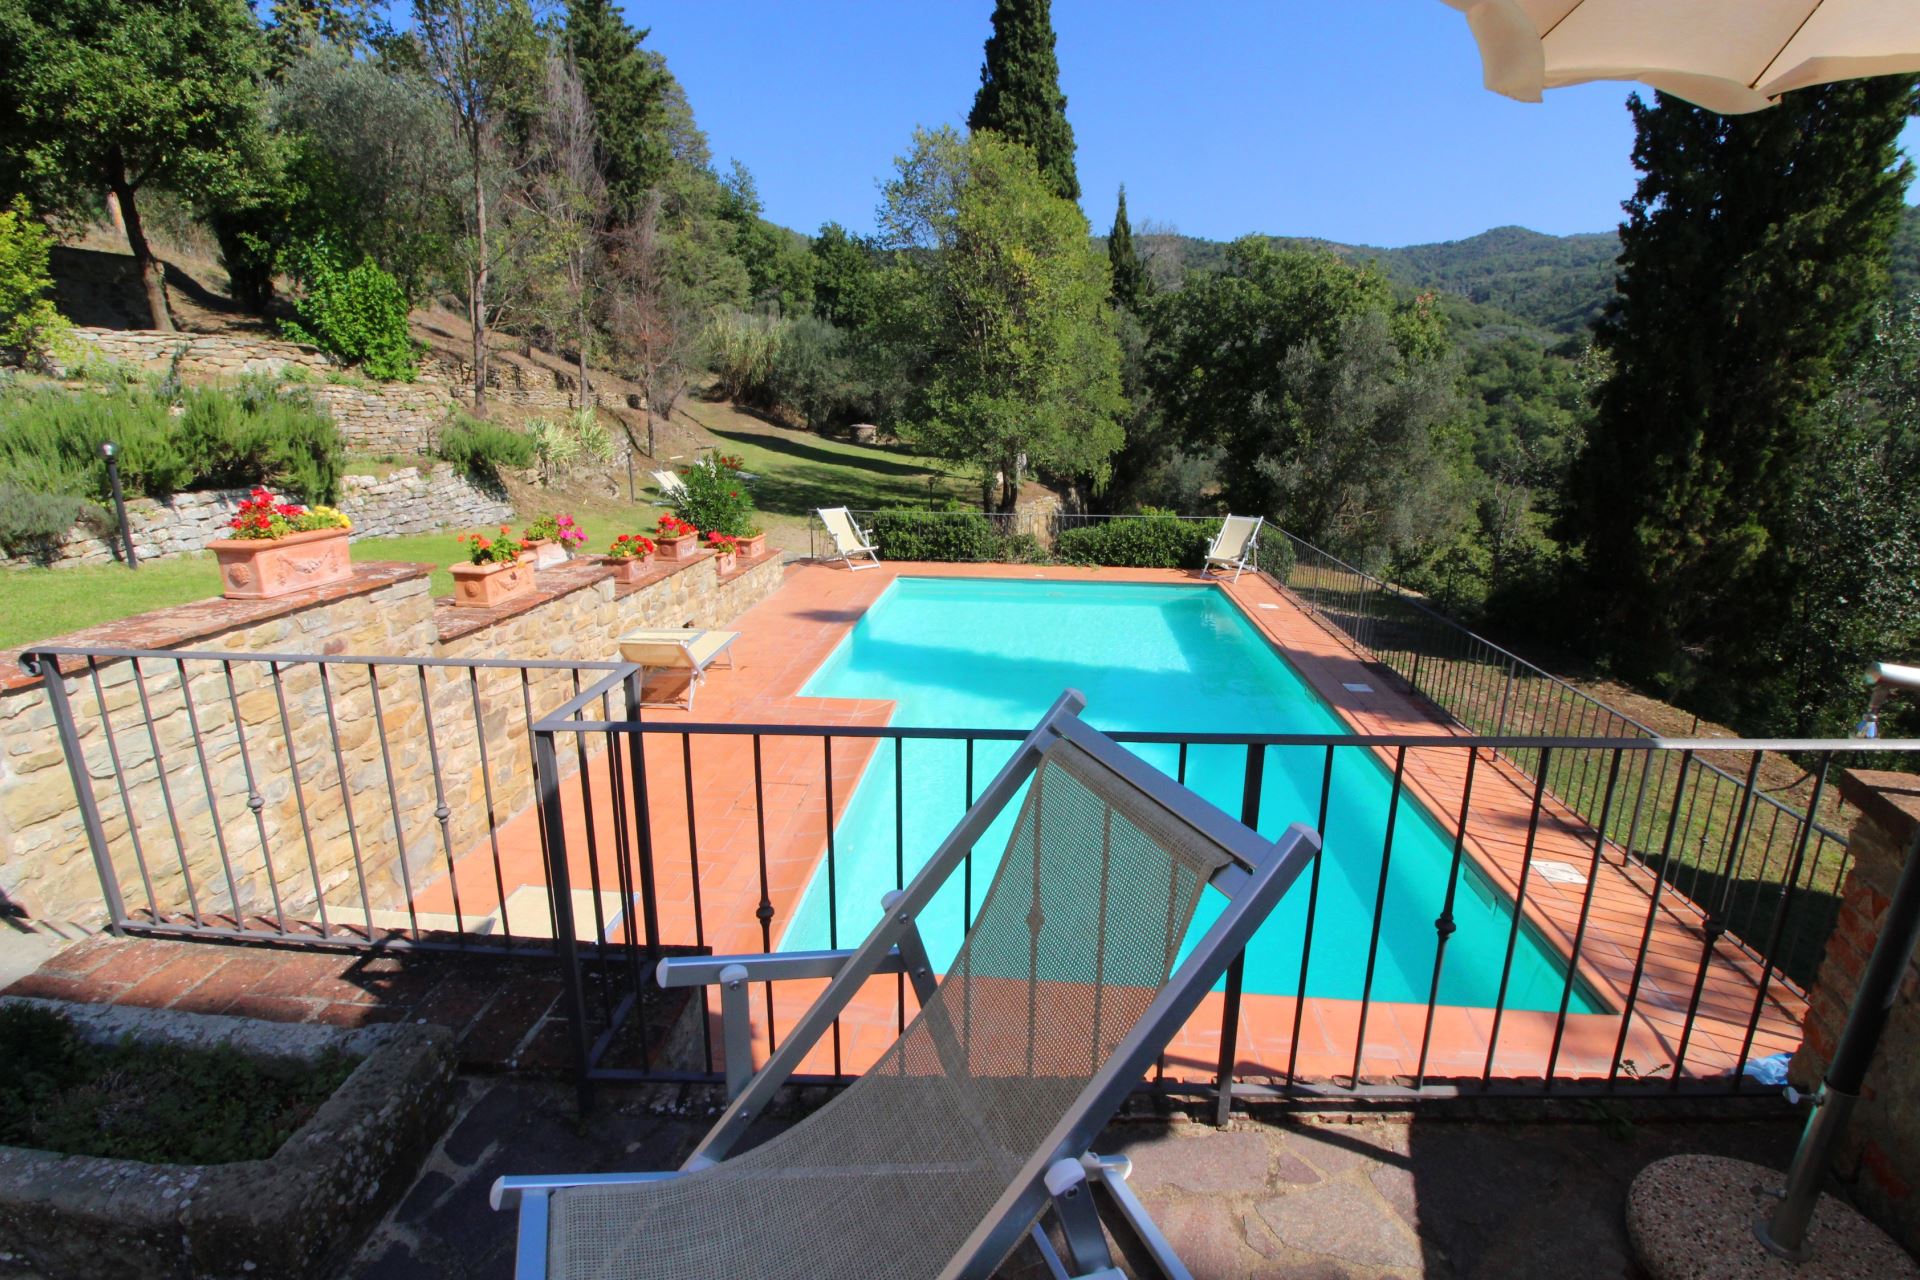 434_0c0e3d8_Kindvriendelijk vakantiehuis met privé zwembad, Borgo Caprile, Toscane, Cortona, Arezzo, (38).